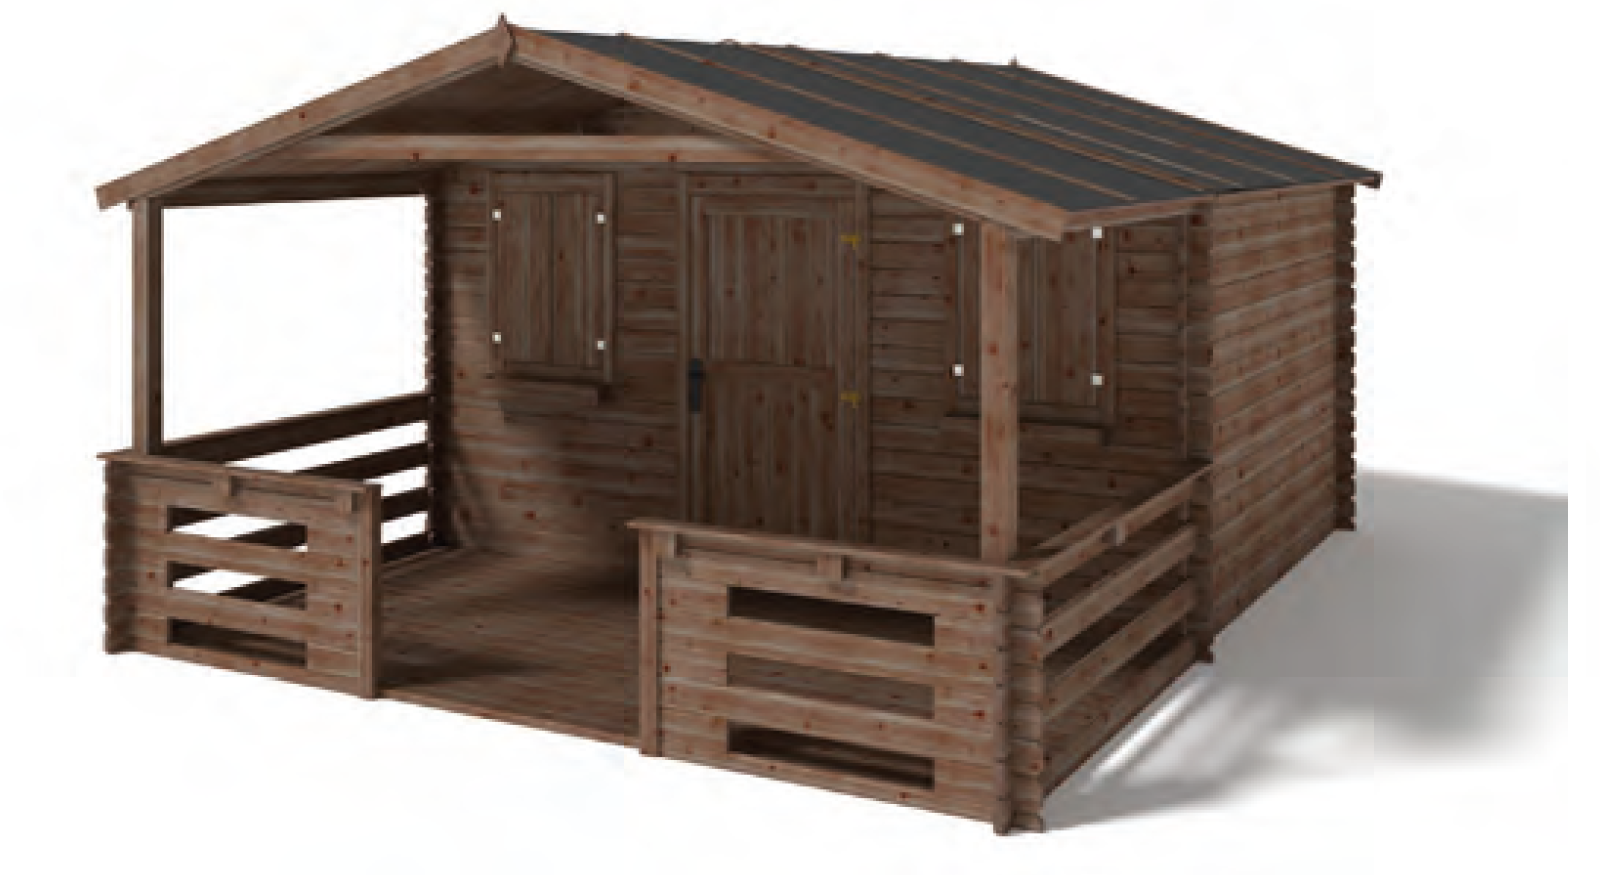 Alaska Garden Shelter with porch option 400 x 400 x 251 cm